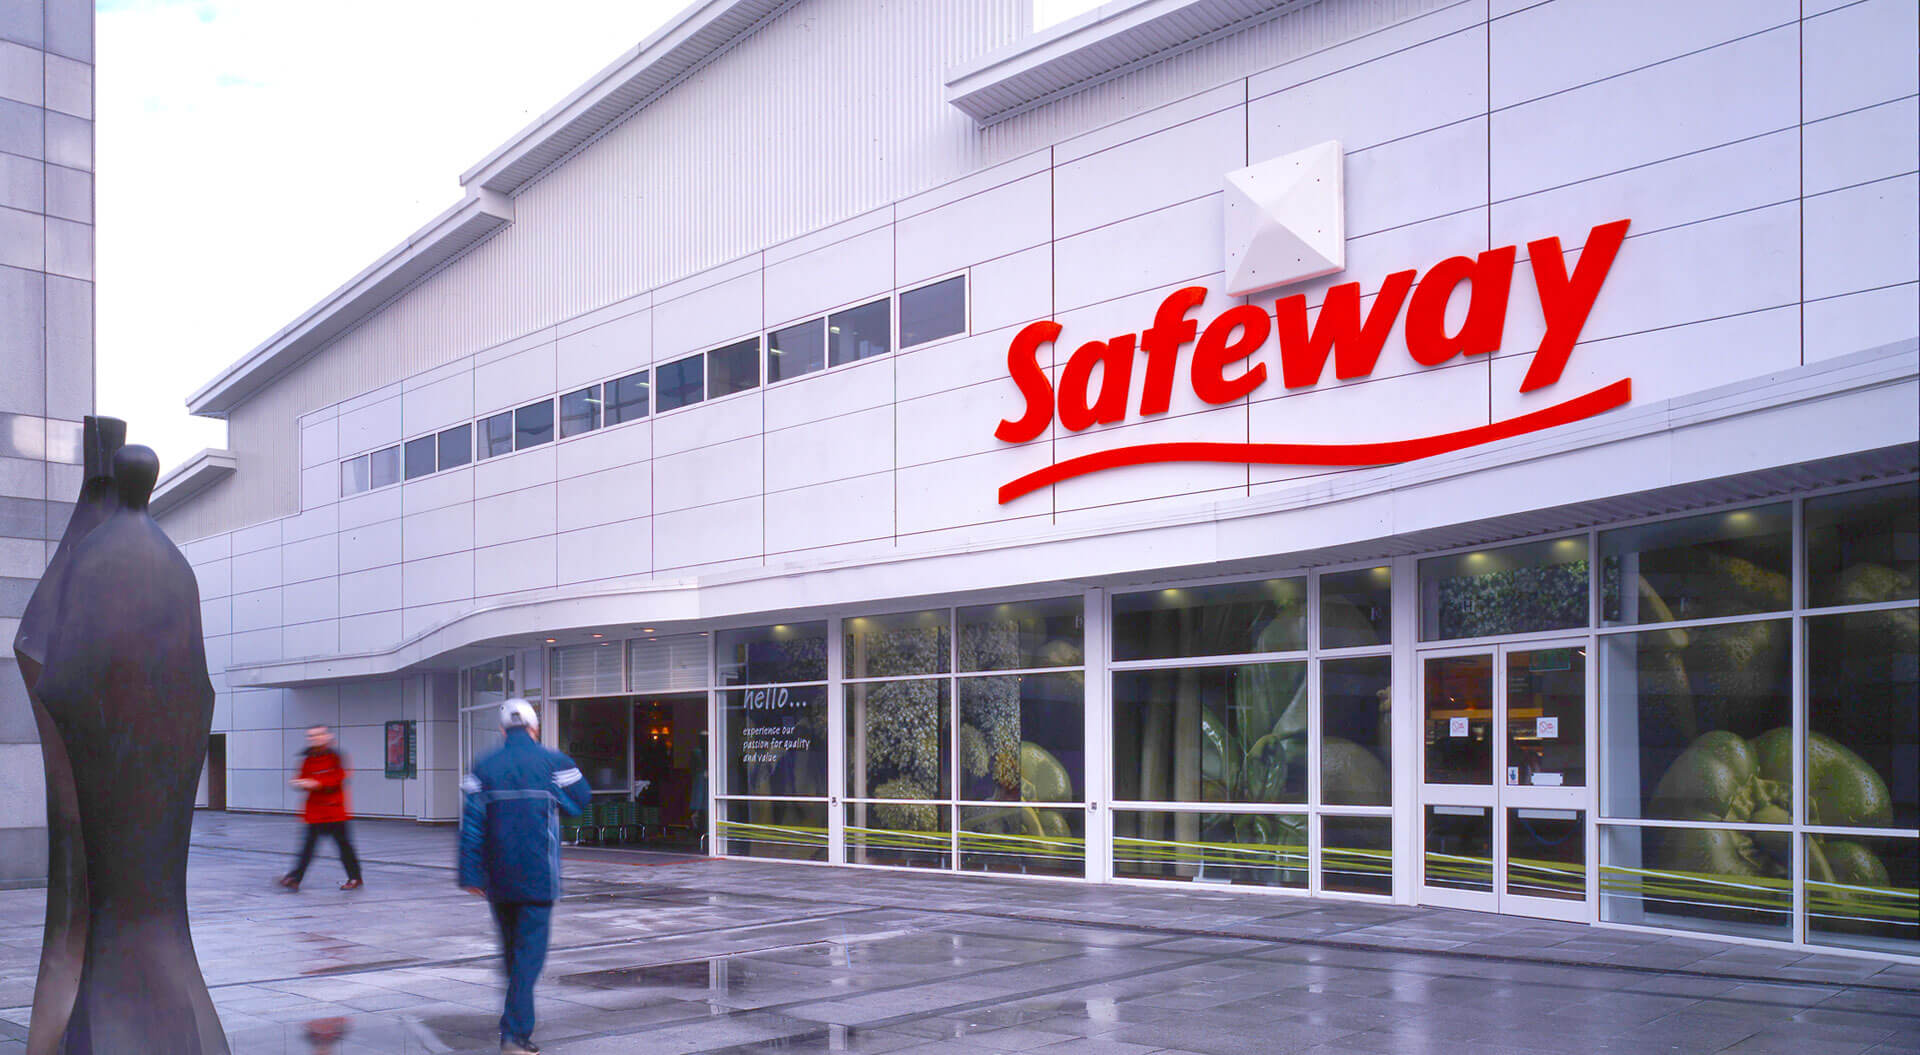 Safeway external branding and store design for convenience supermarkets